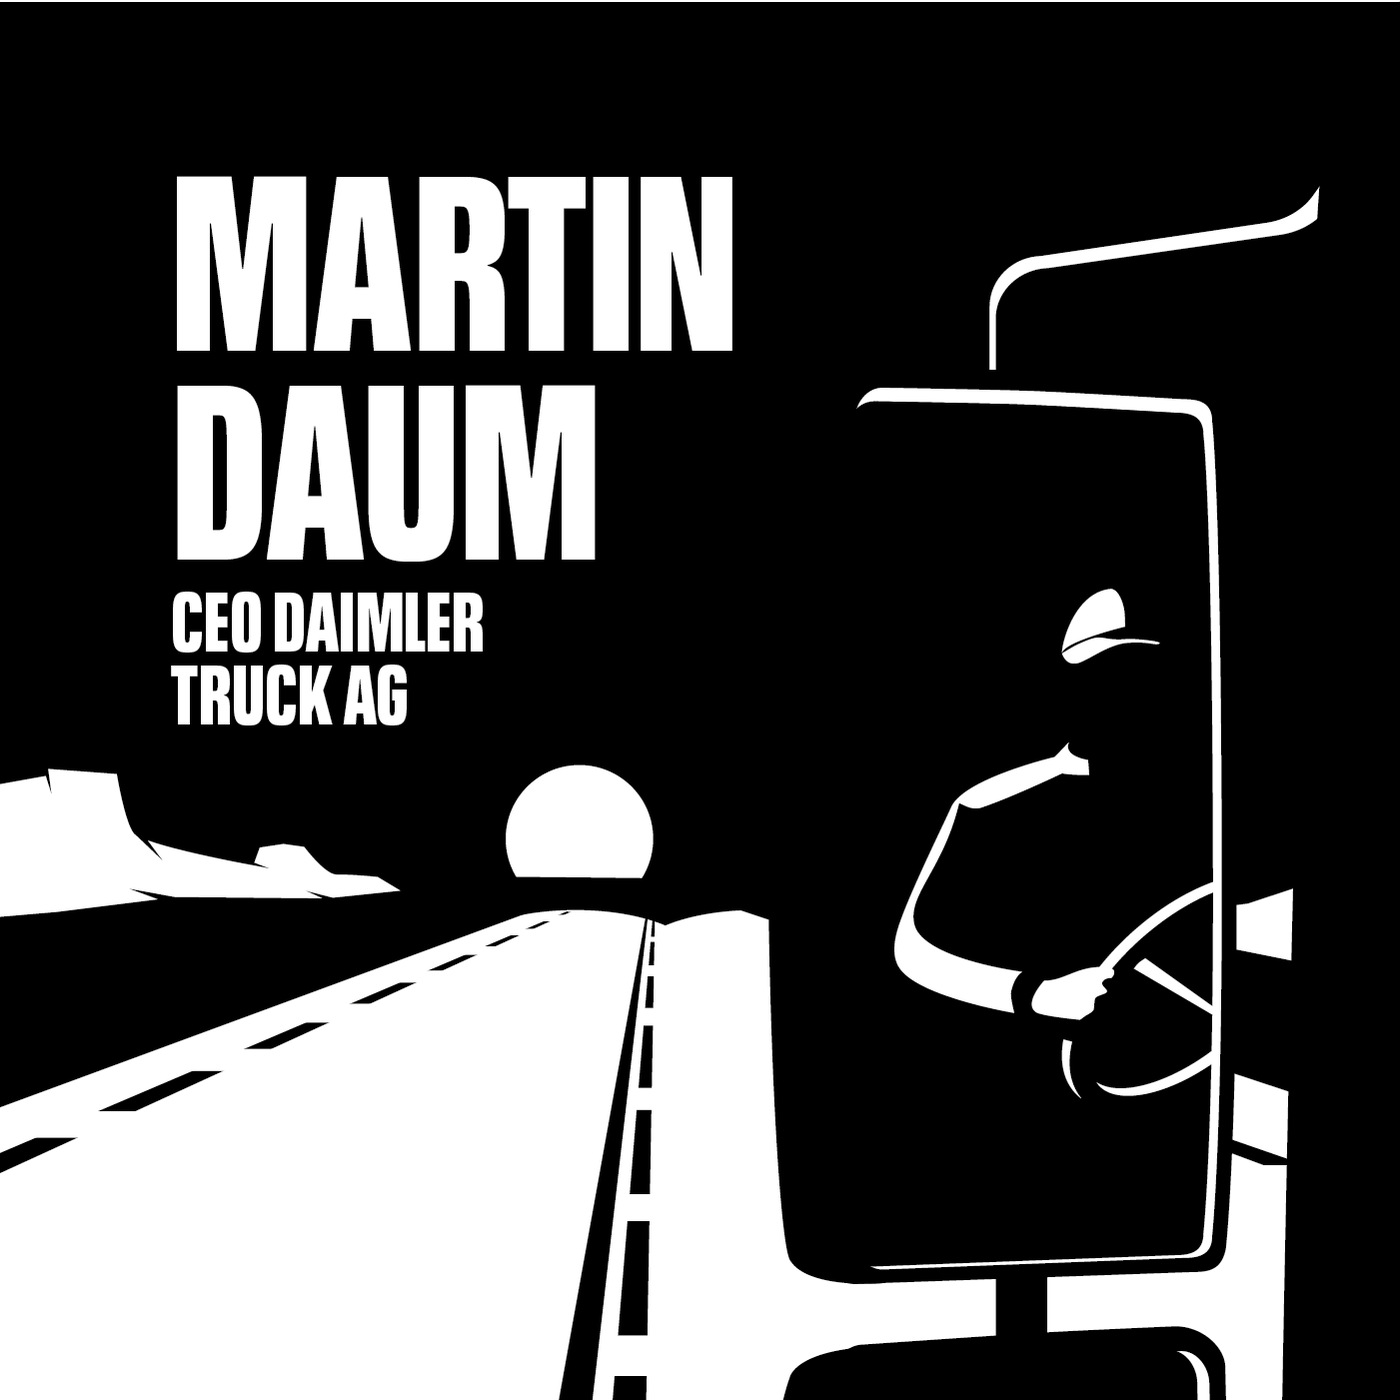 Daimler Truck AG CEO. Martin Daum.